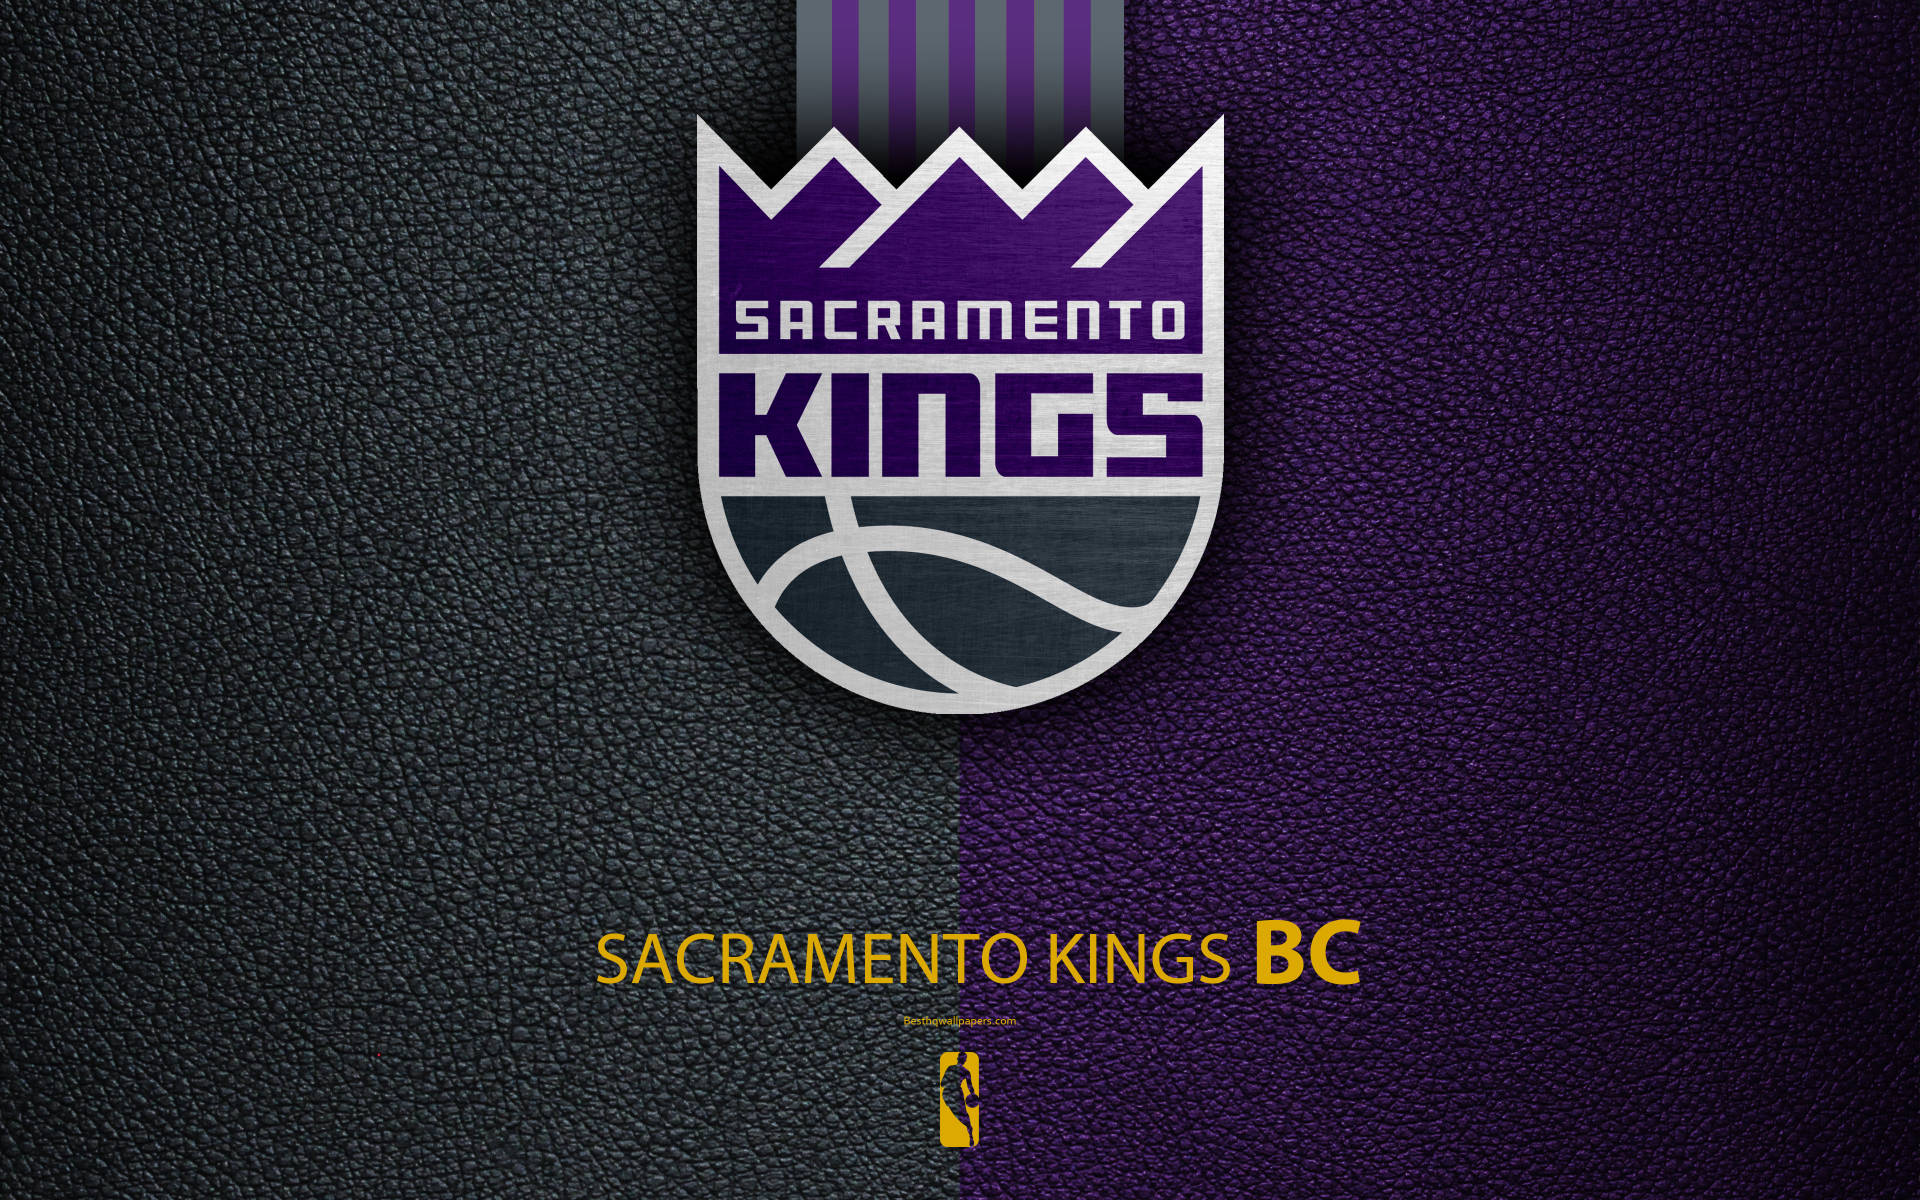 Sacramentokings Logo Auf Lederstruktur Wallpaper